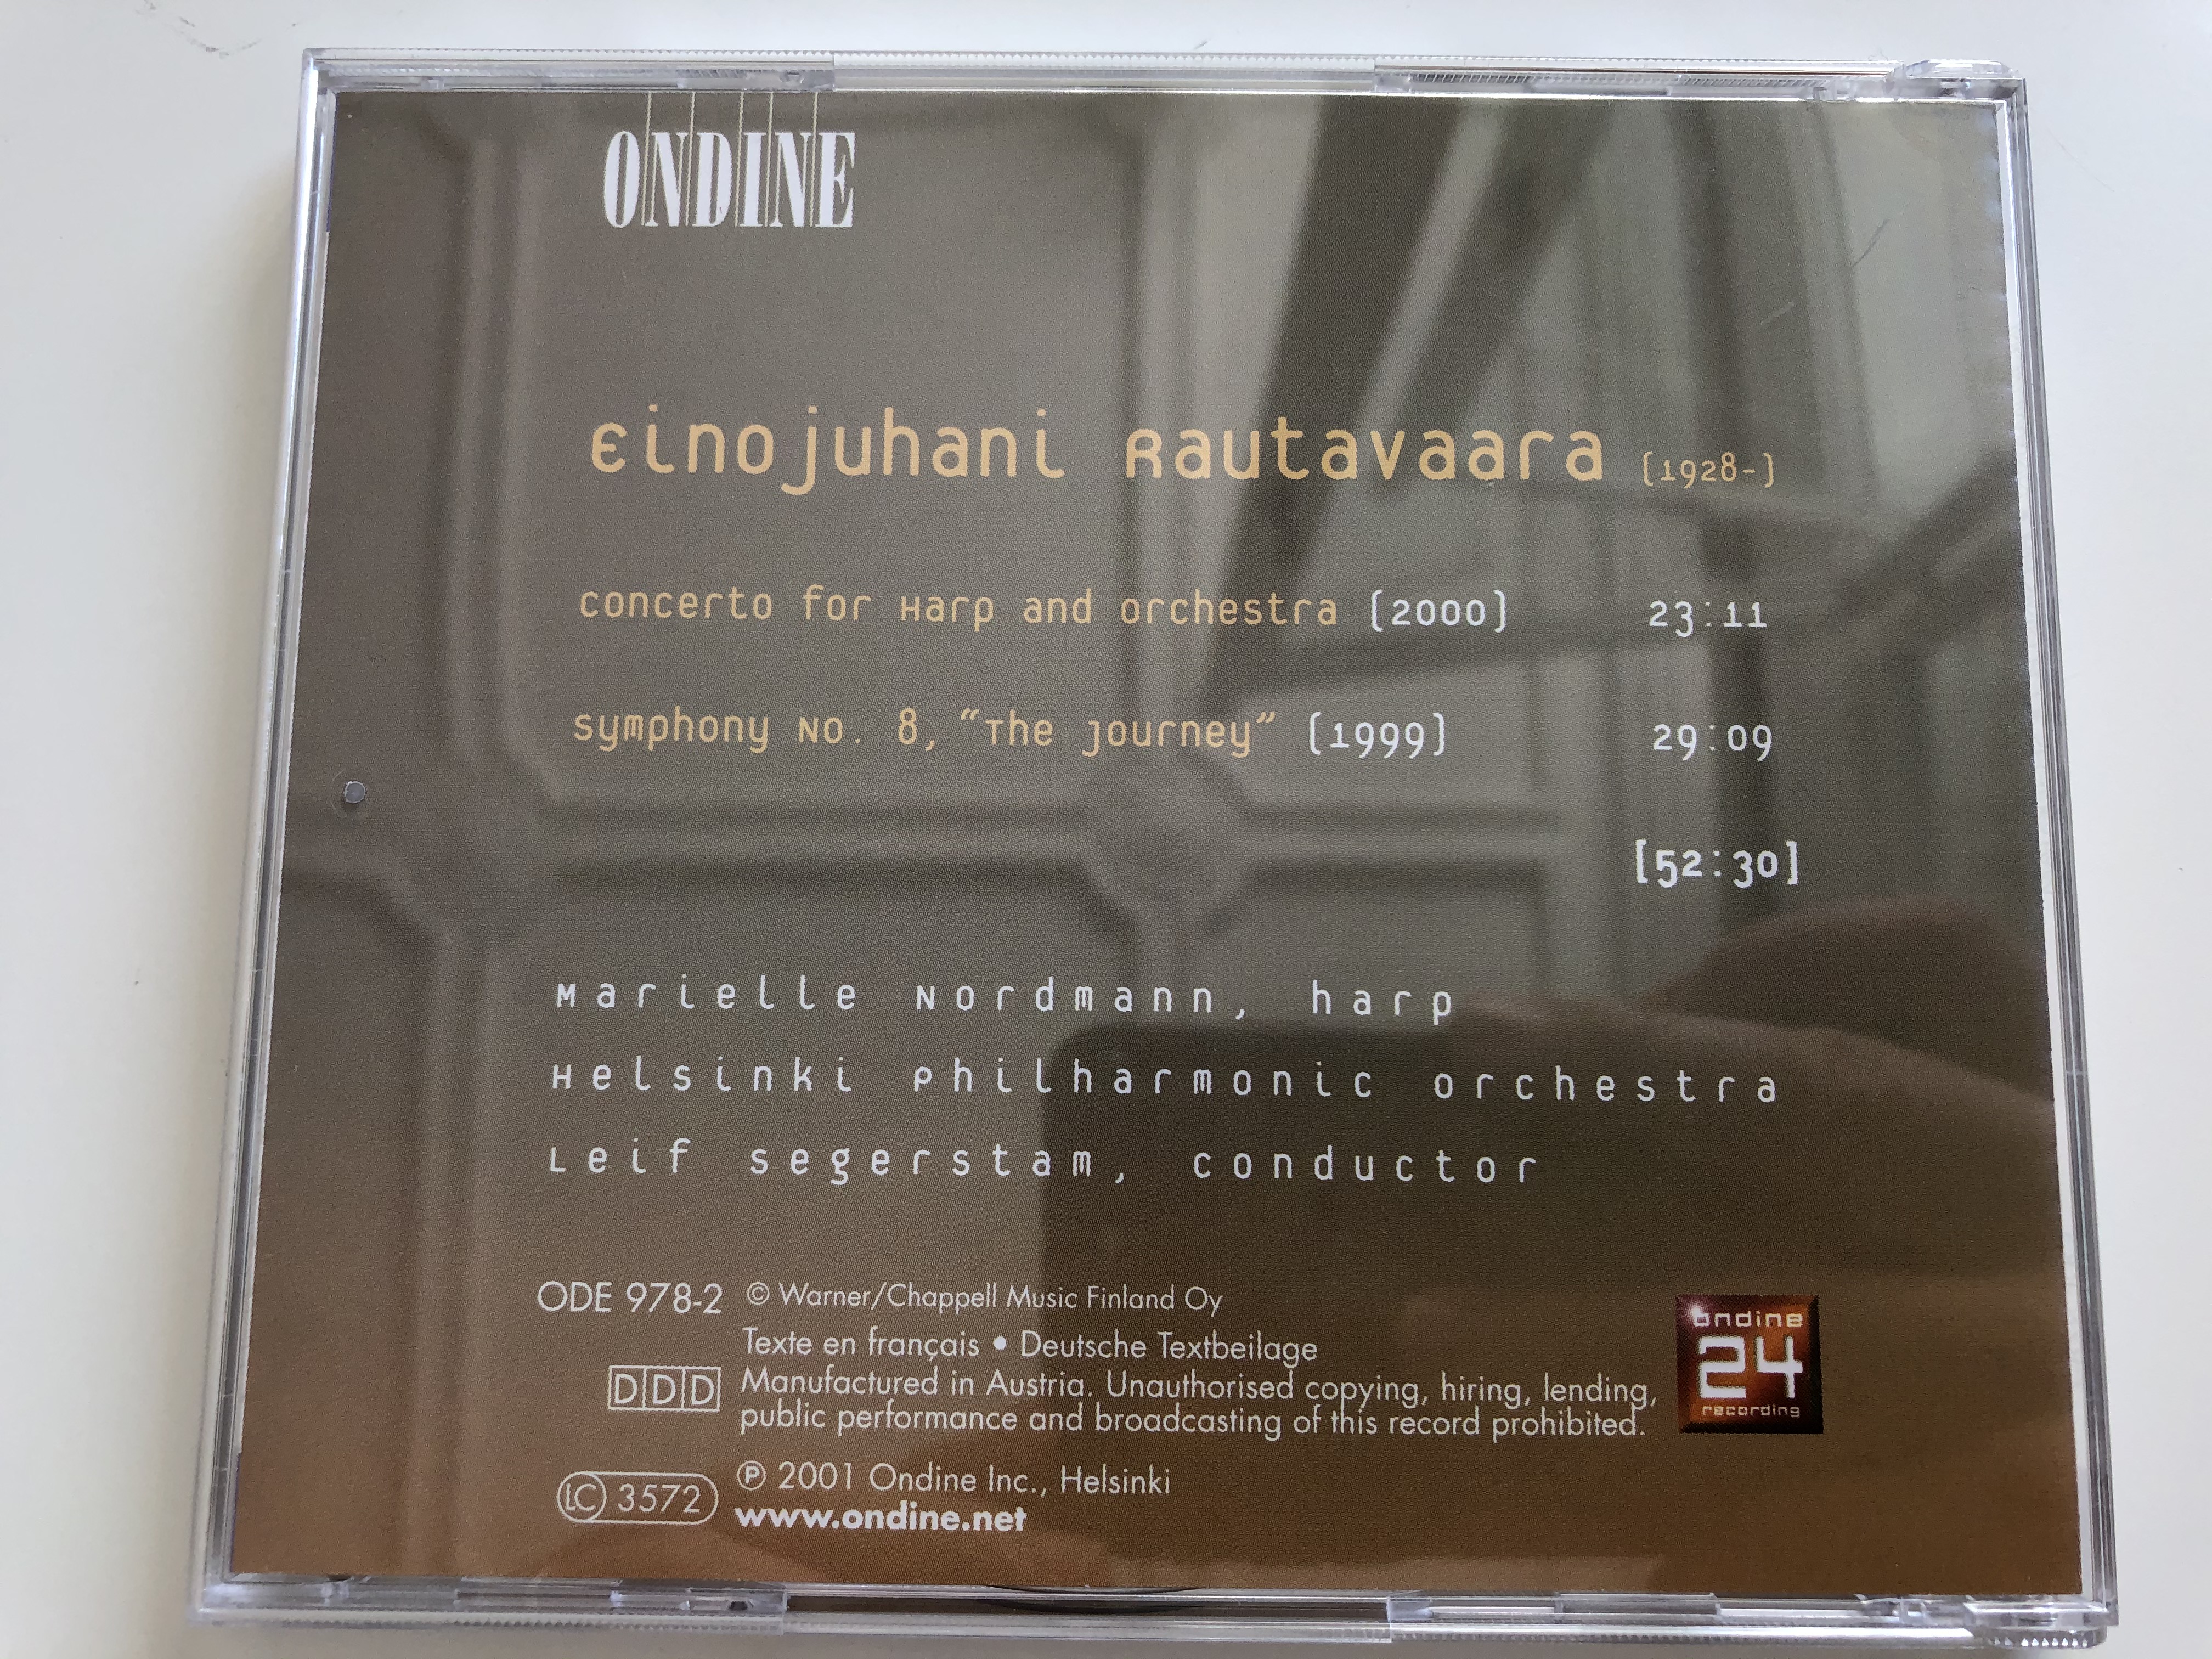 rautavaara-symphony-no.-8-the-journey-harp-concerto-harp-marielle-nordmann-helsinki-philharmonic-orchestra-leif-segerstam-ondine-audio-cd-2001-ode-978-2-9-.jpg